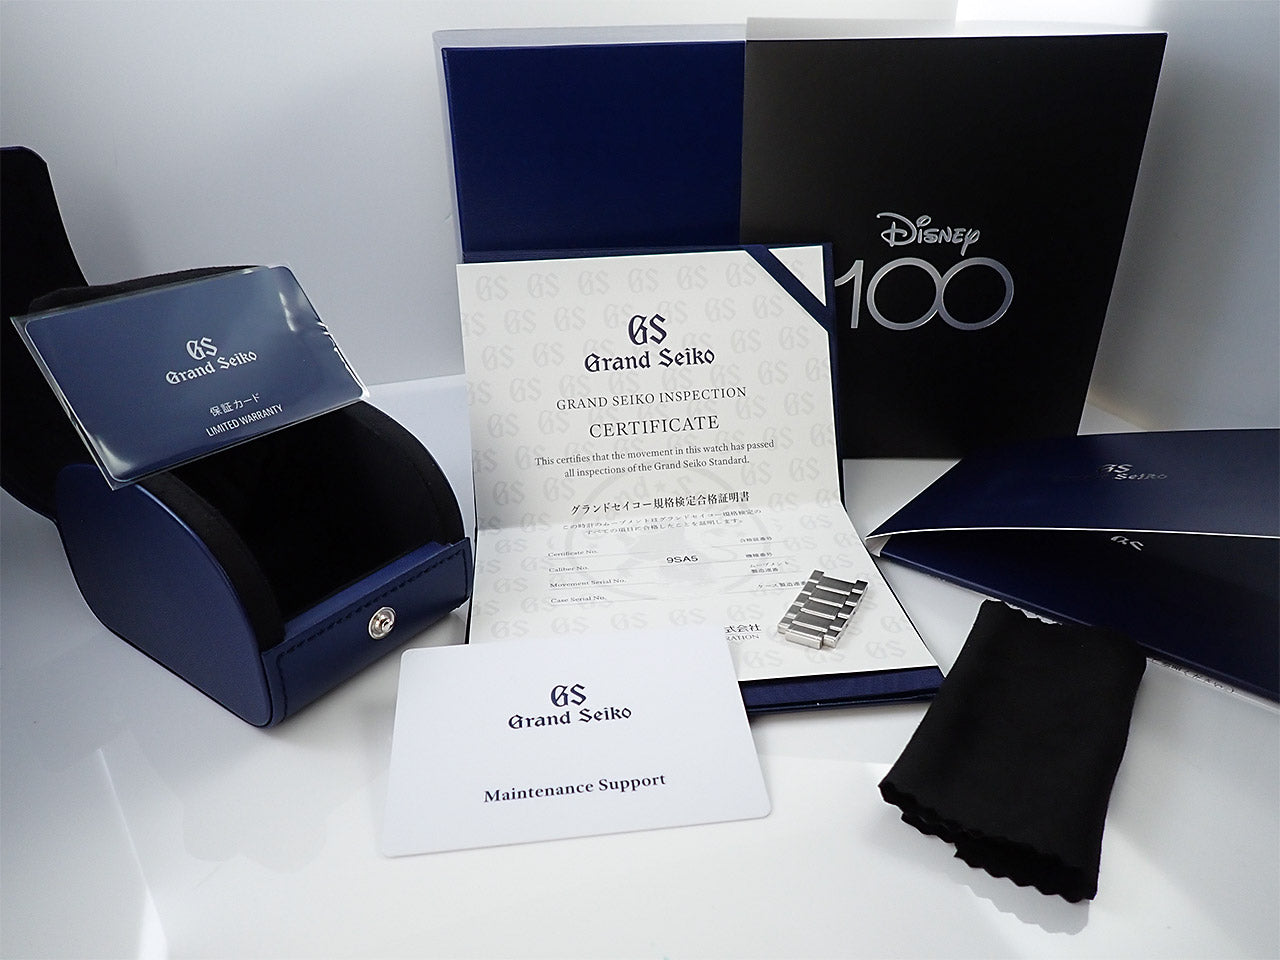 Grand Seiko Disney 100 Limited Edition &lt;Warranty, Box, etc.&gt;